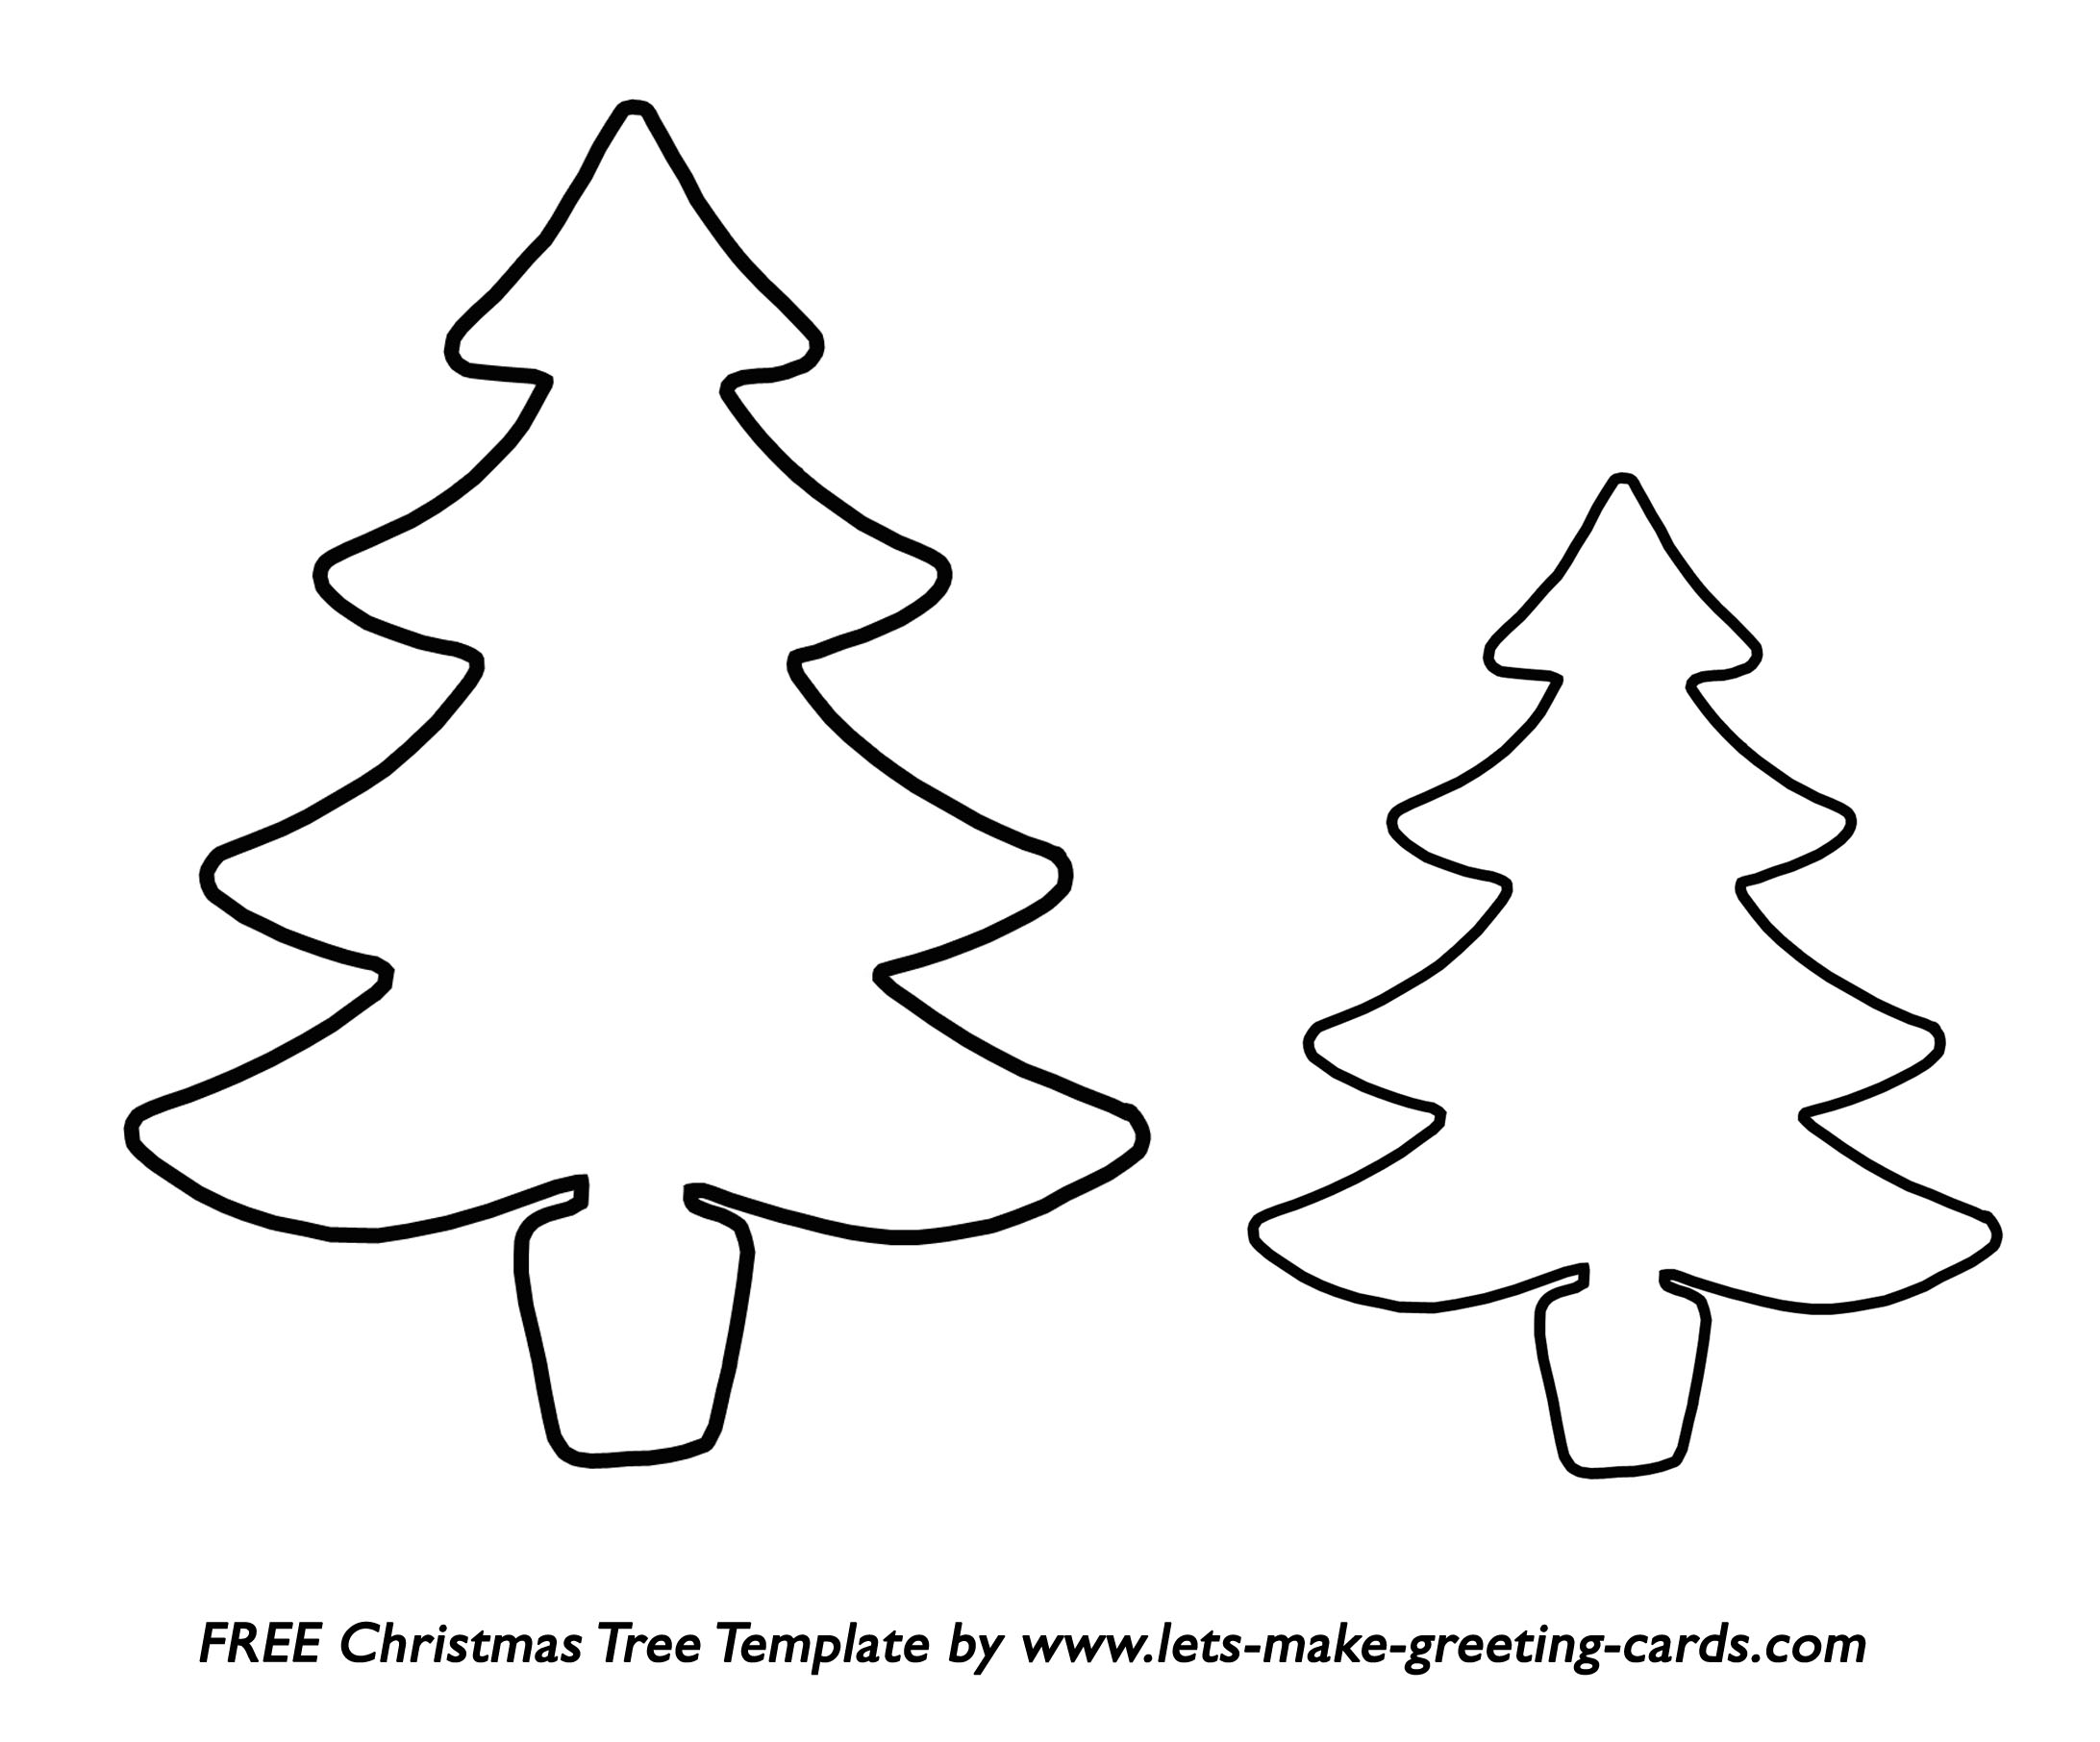 FREE Christmas Tree Template. FREE Christmas Card Ideas.